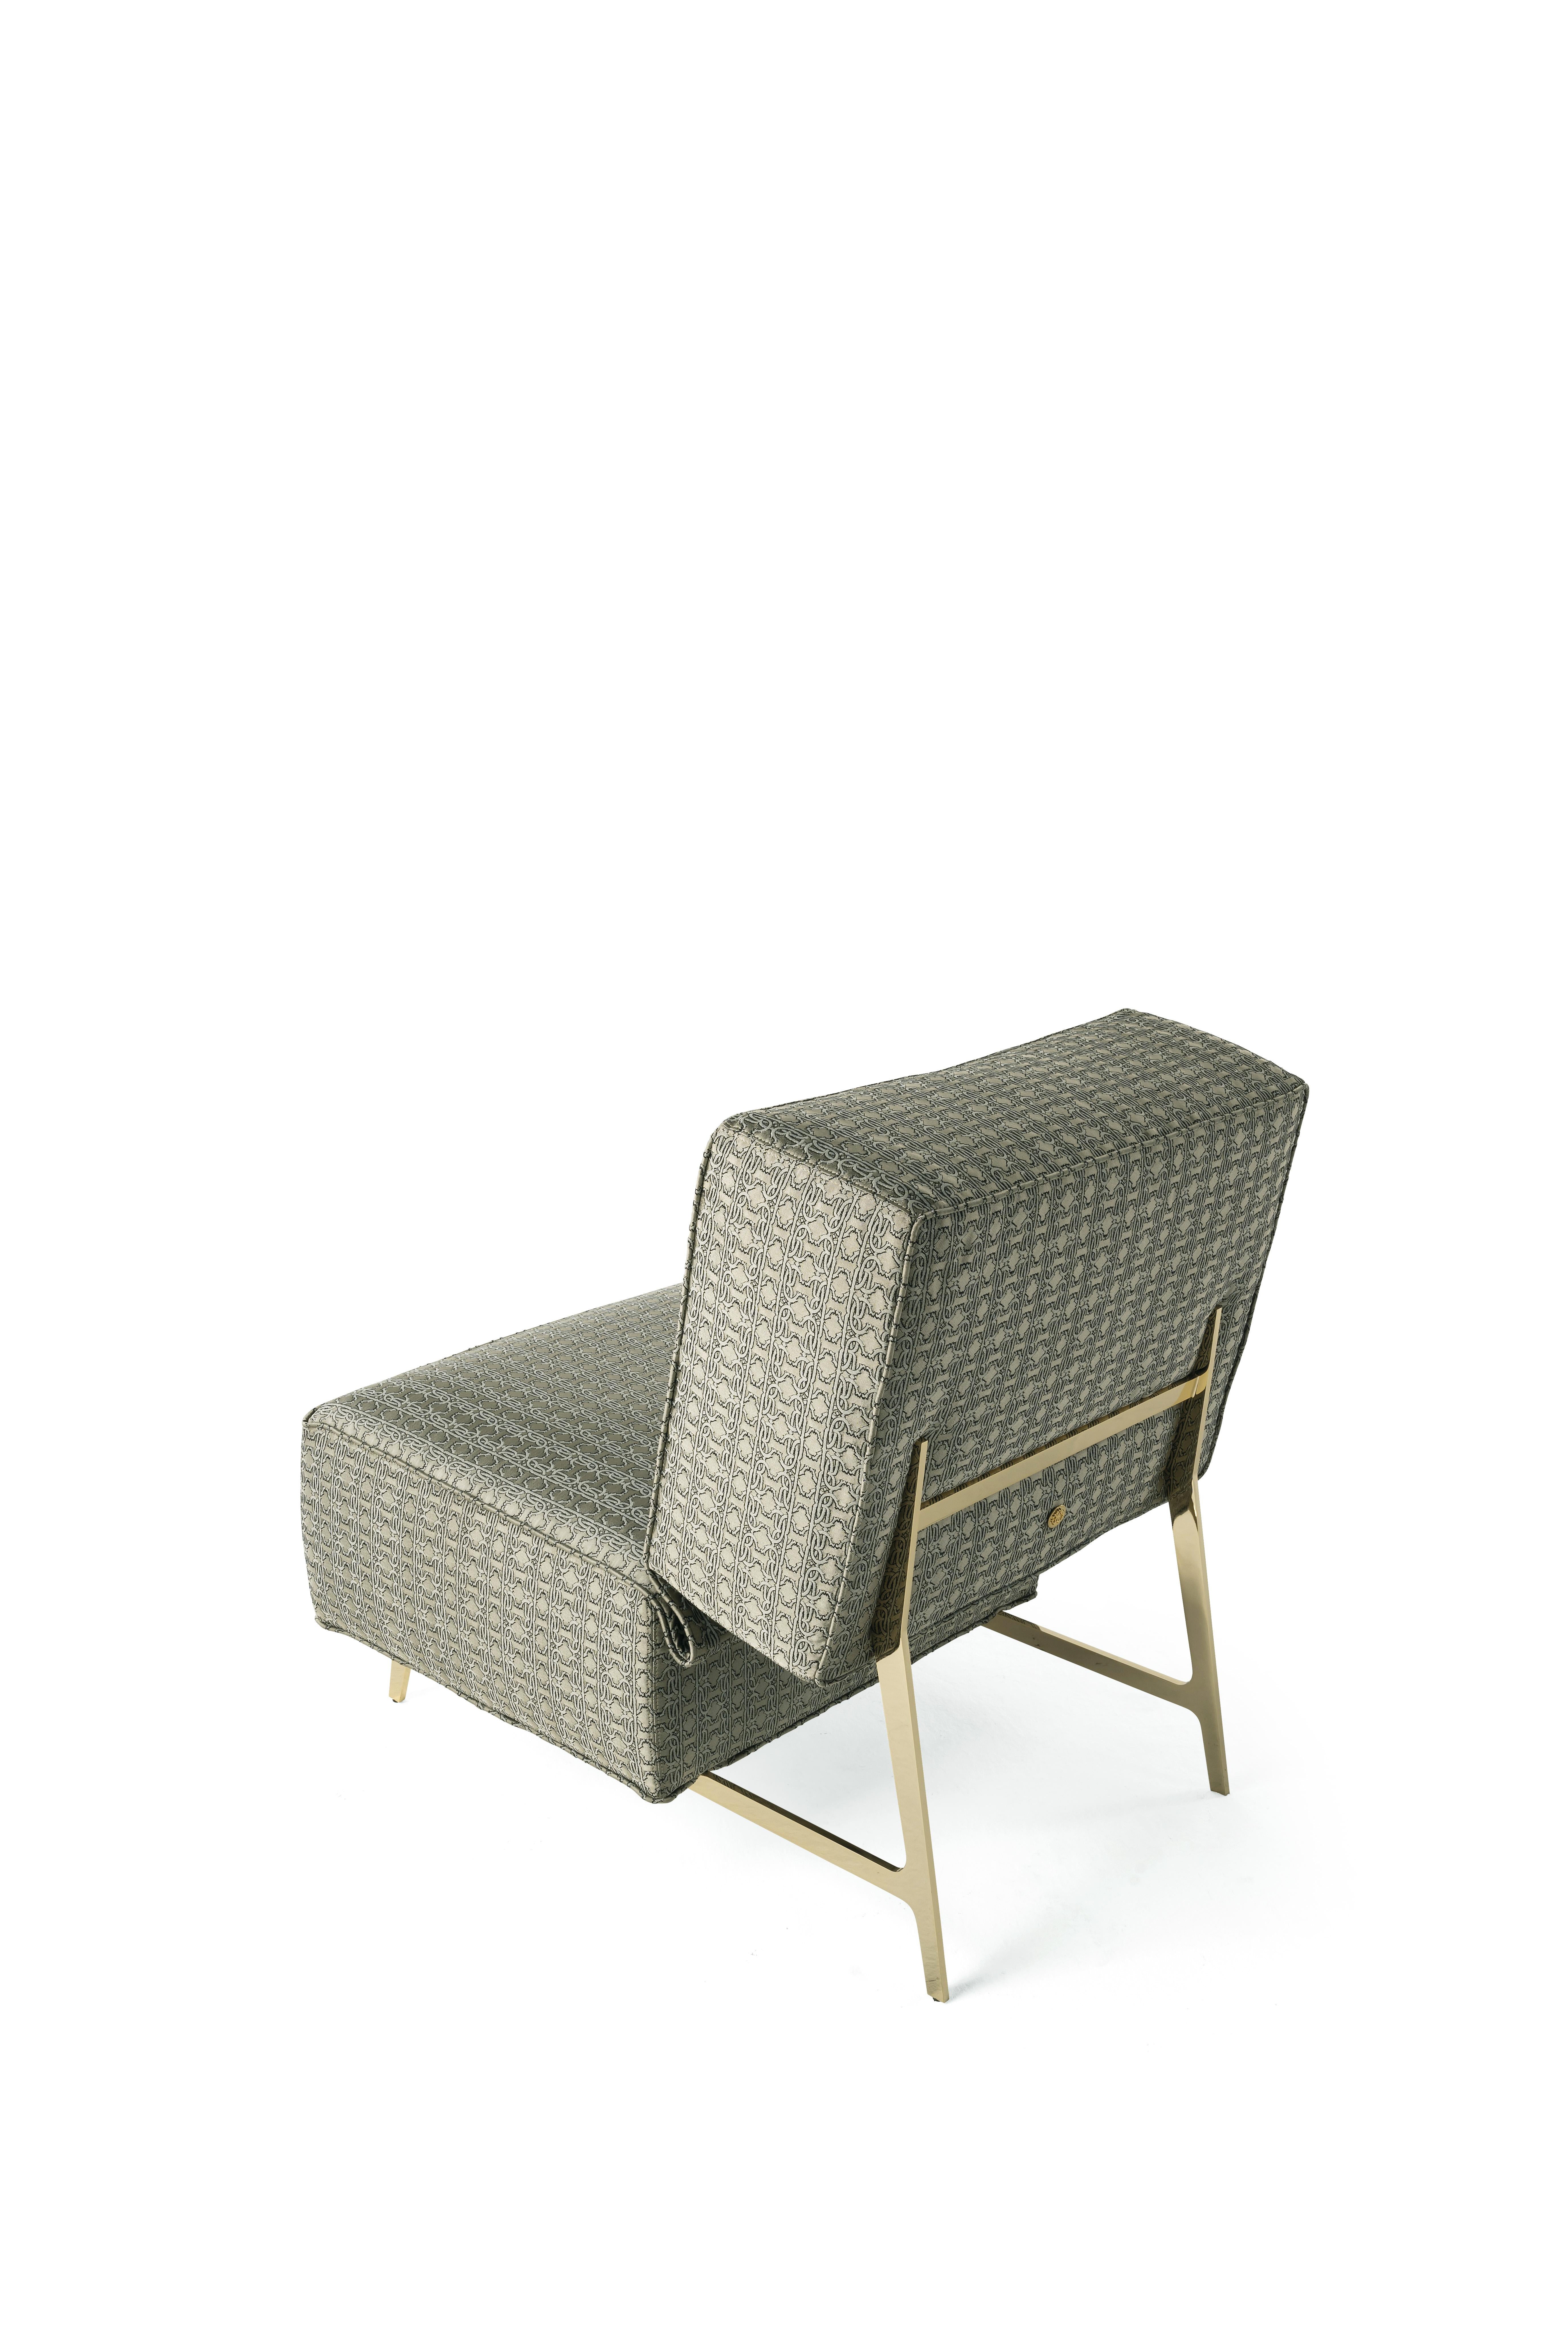 Italian 21st Century Davis Armchair in Monogram Fabric by Roberto Cavalli Home Interiors For Sale